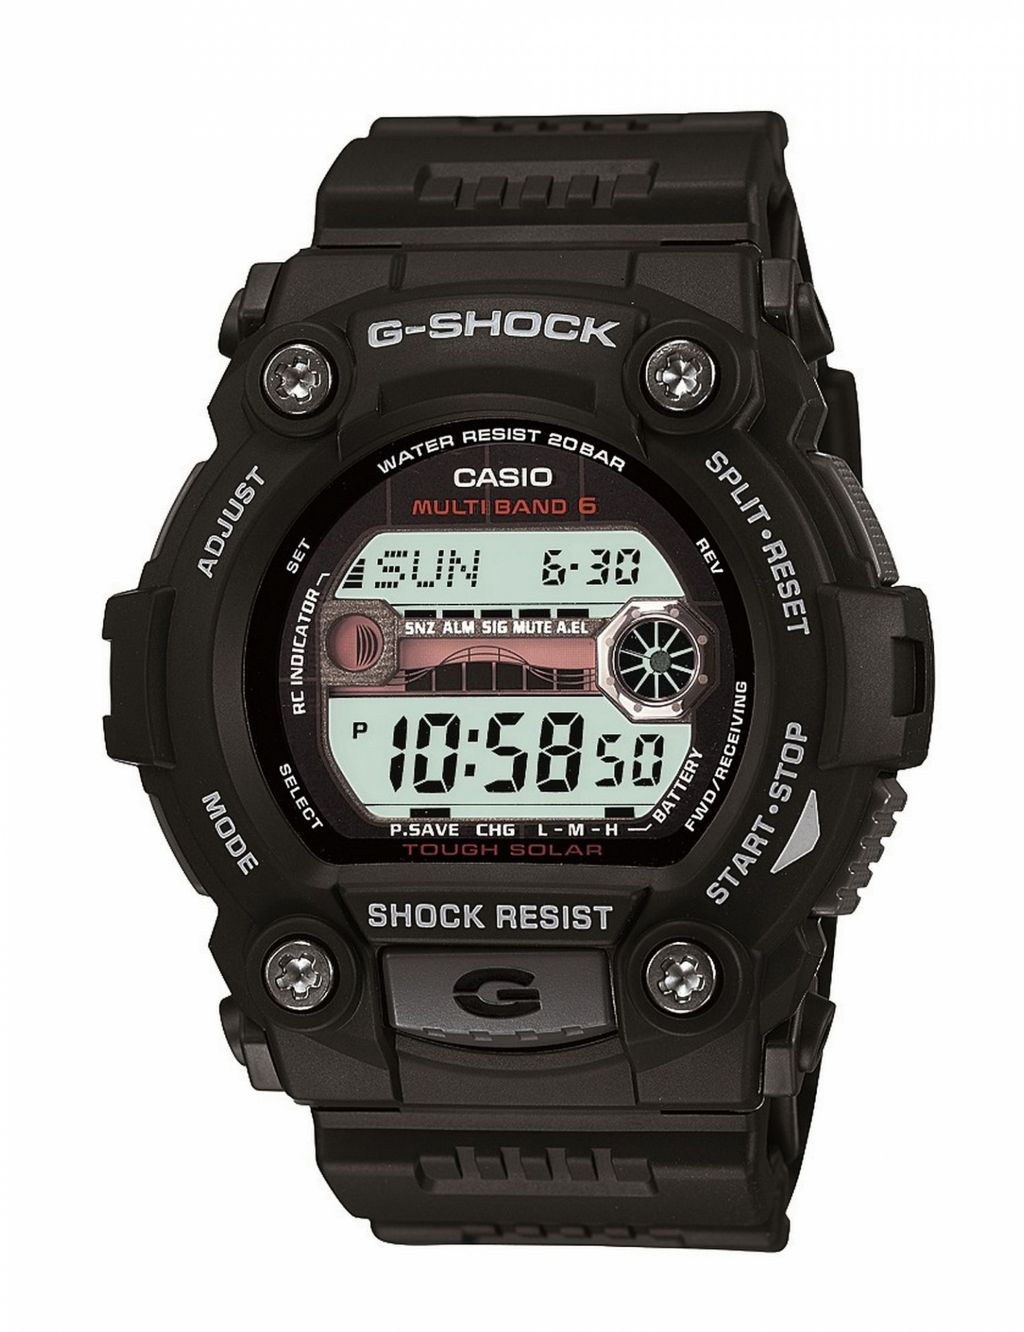 Casio G-Shock Waterproof Chronograph Watch image 1